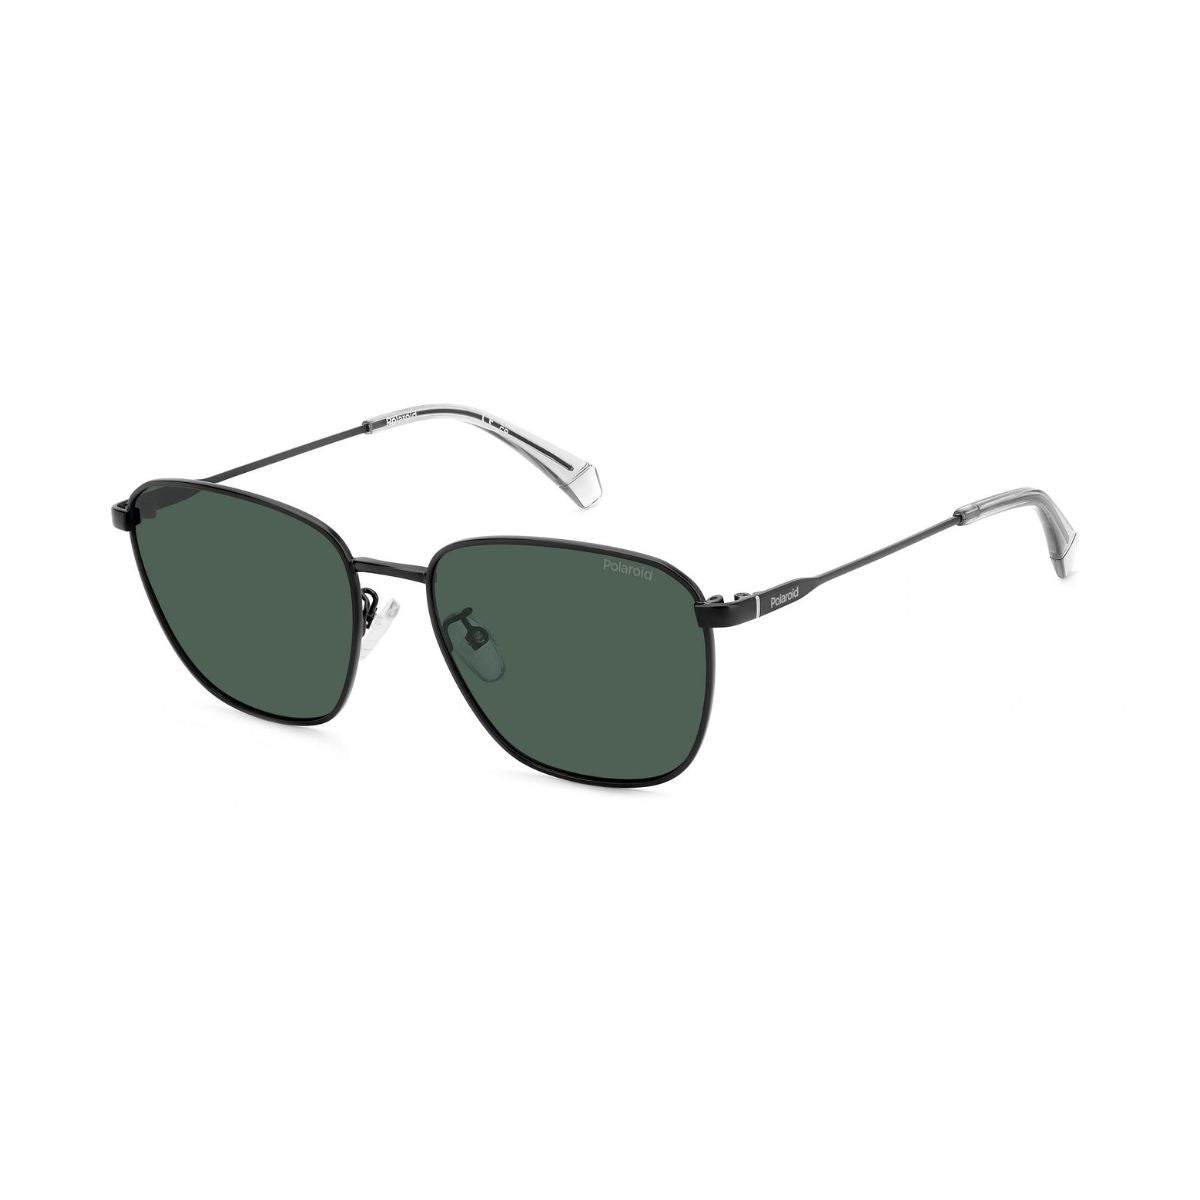 "Buy Polariod 4159 003 Stylish Polarized Sunglasses For Men At Optorium""